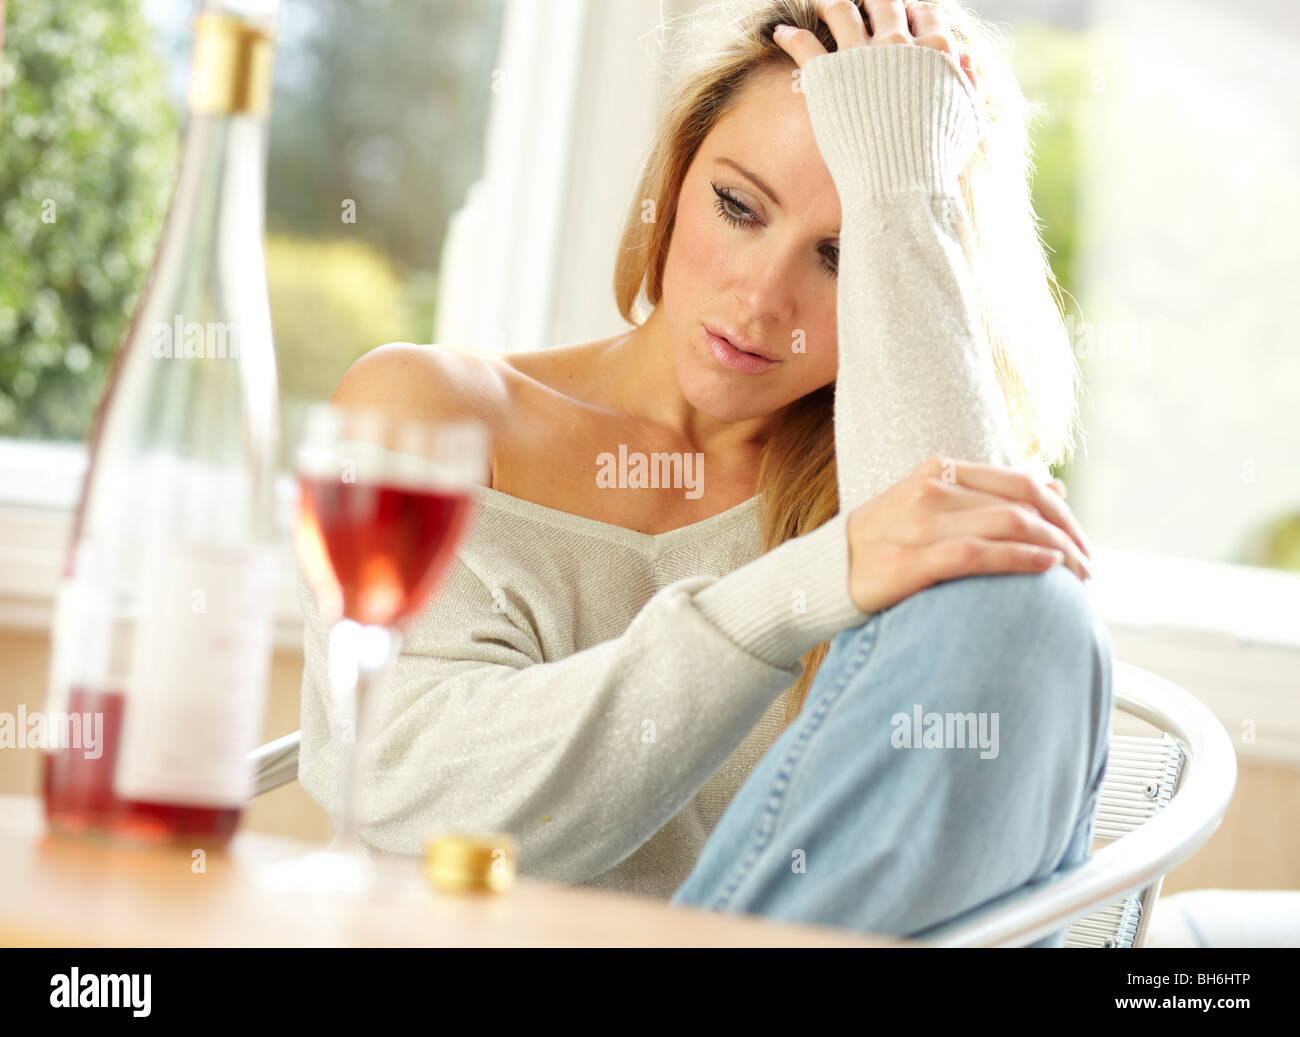 Woman drinking wine Stock Photo